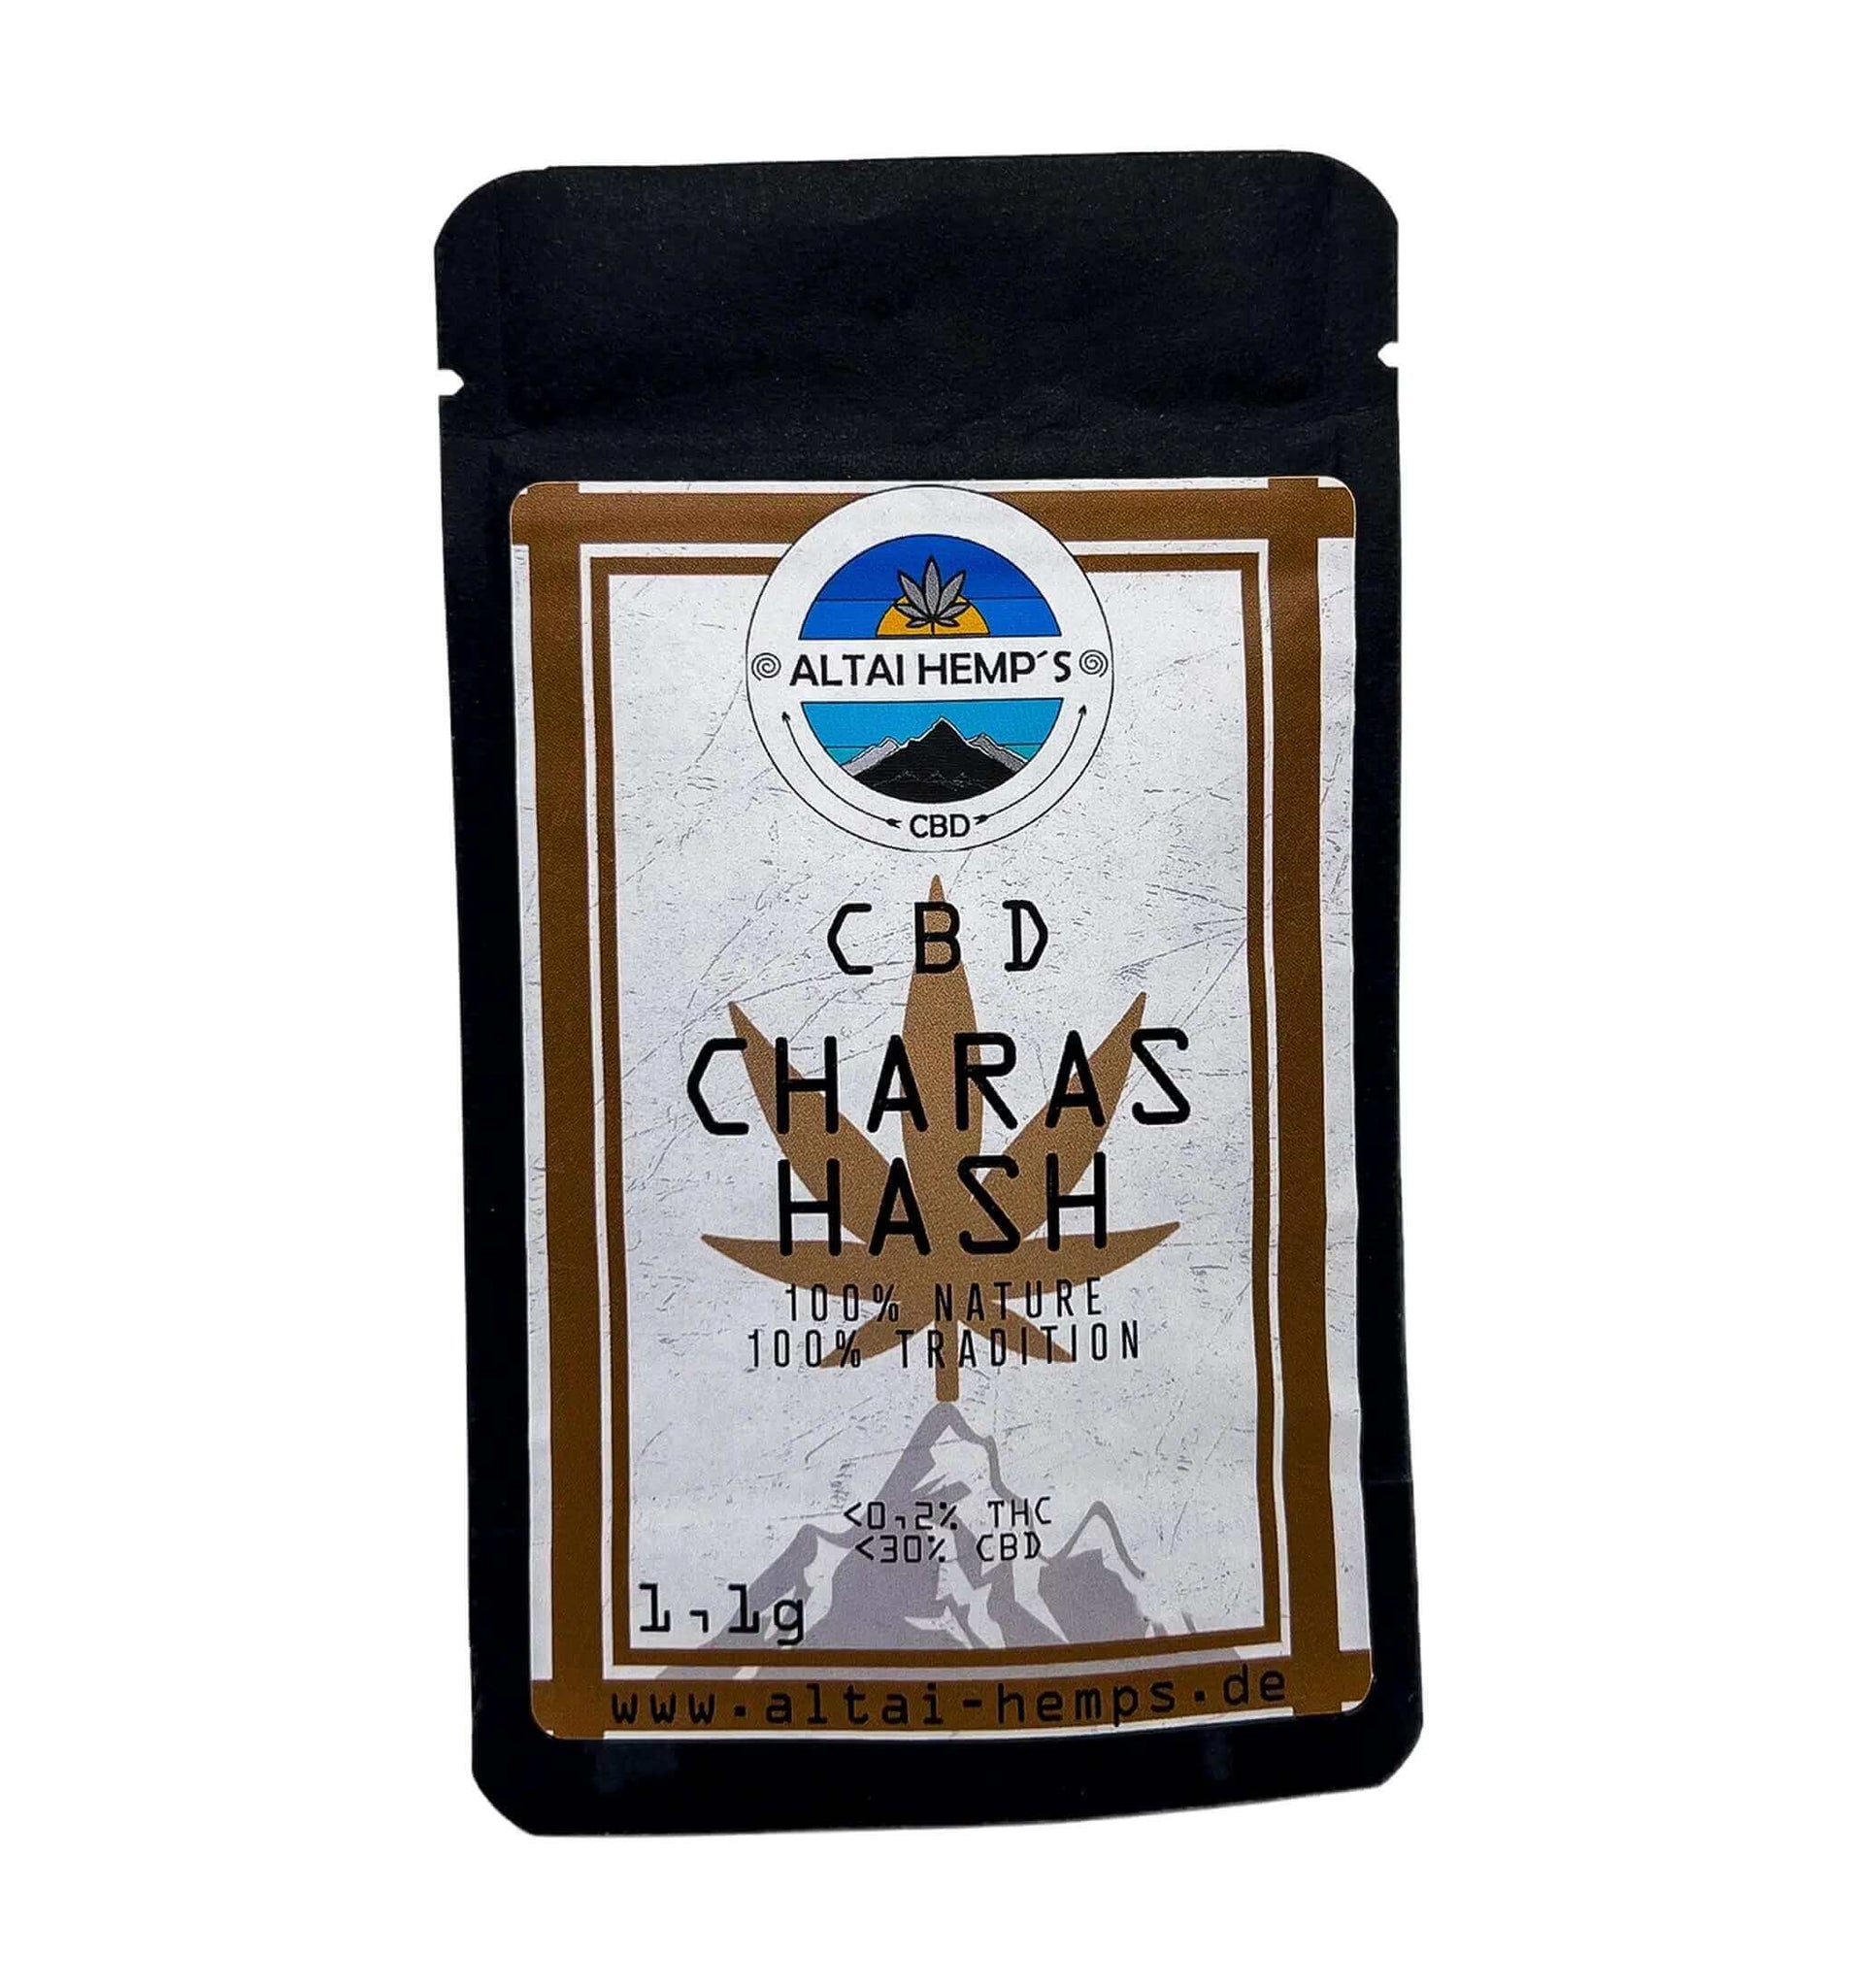 Altai-Hemp's Classics CBD Hash Charas 1,1g